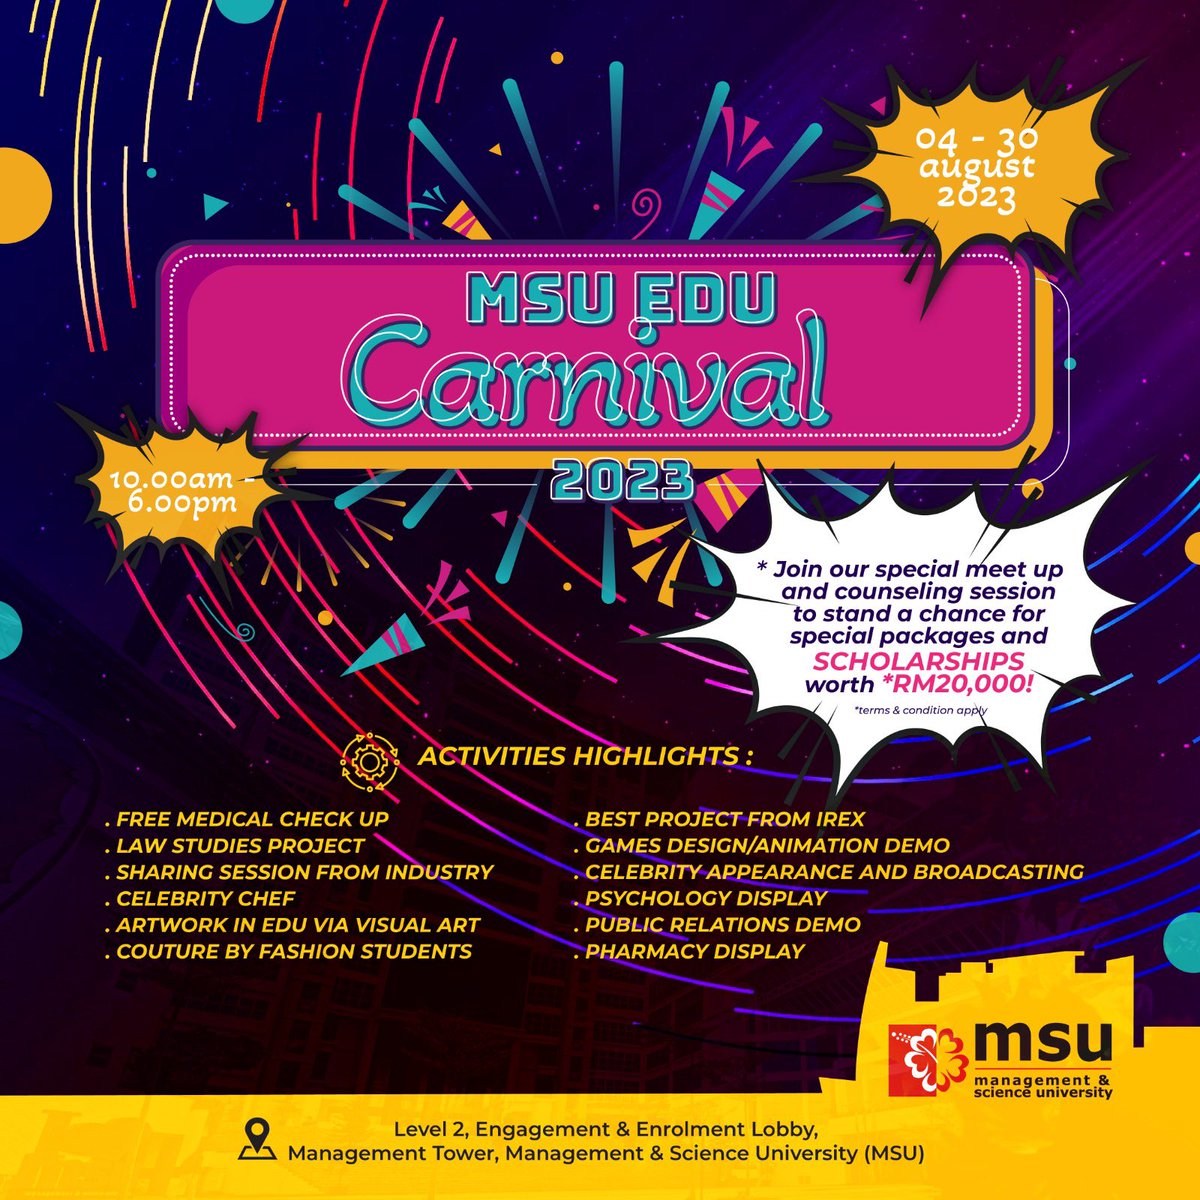 Jemput datang semua ke MSU Edu Carnival bermula 4/8/2023 , bertempat di Main Campus Shah Alam, ada perbagai program menarik sepanjang hari. Jangan lupa ! #msueducarnival #enrol2msu #go2msu